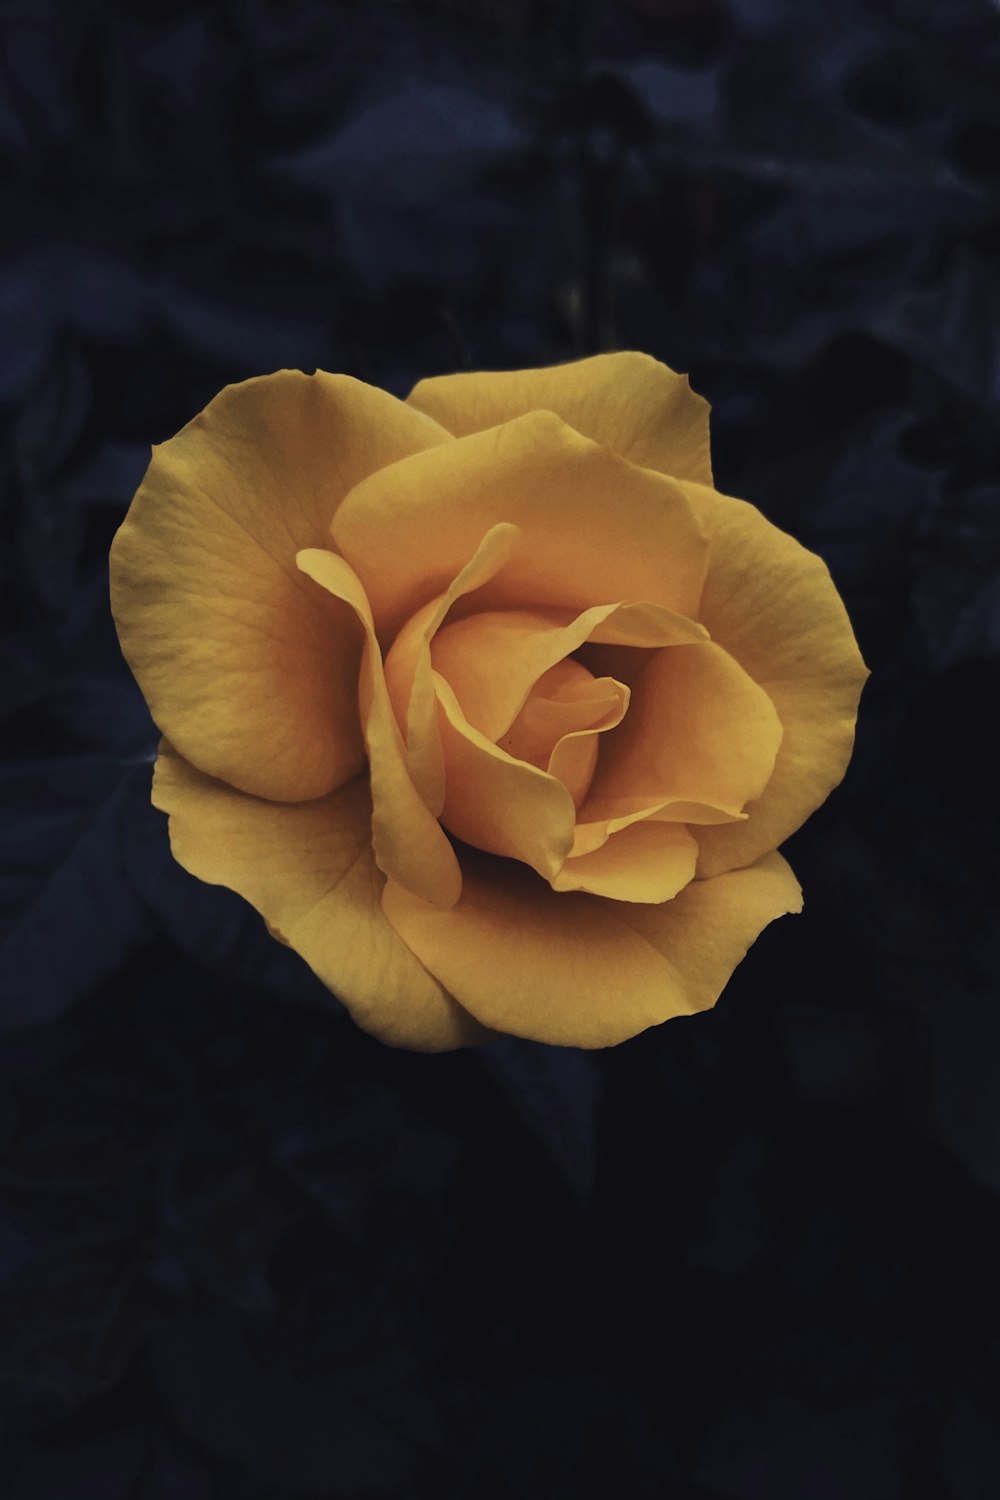 rose jaune en fleur photo en gros plan